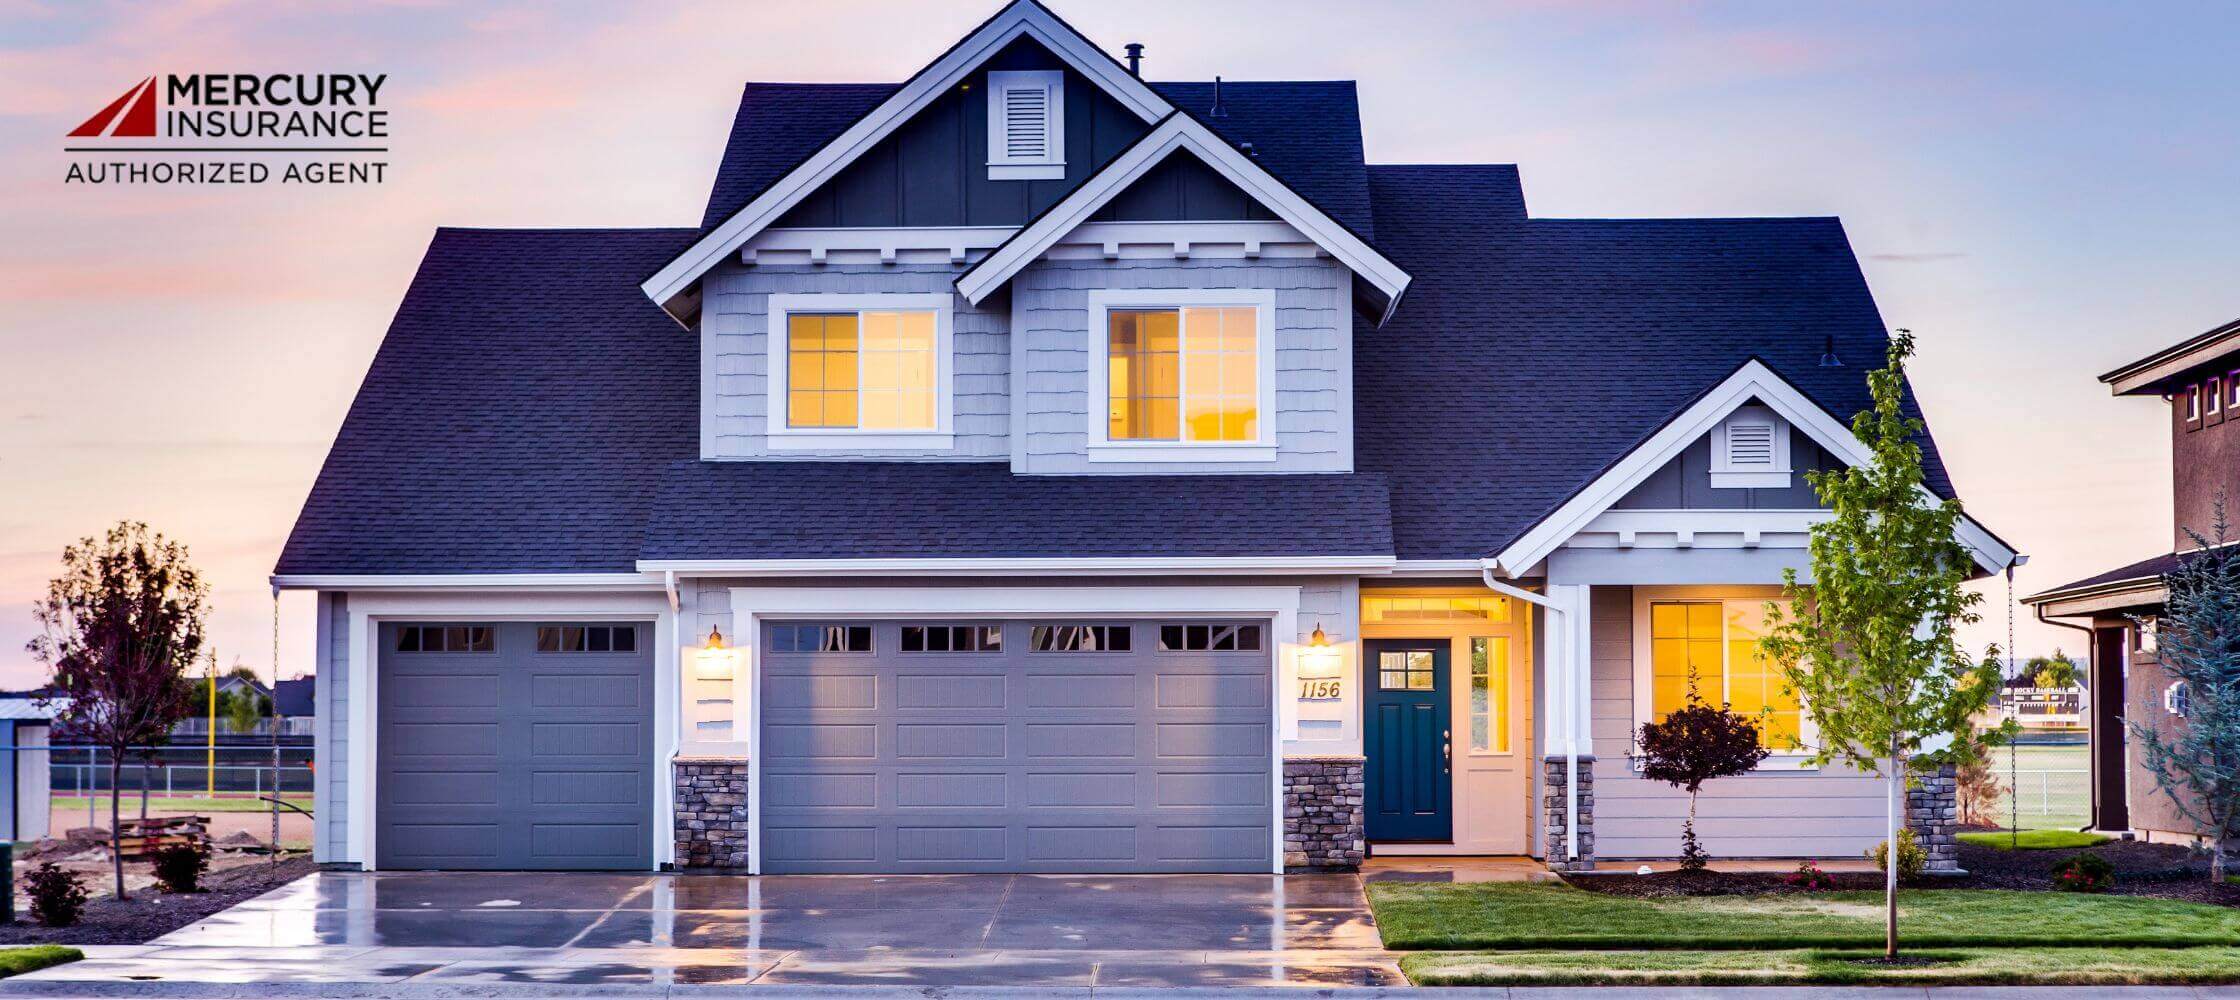  Maximize Homeowner's Insurance Claim